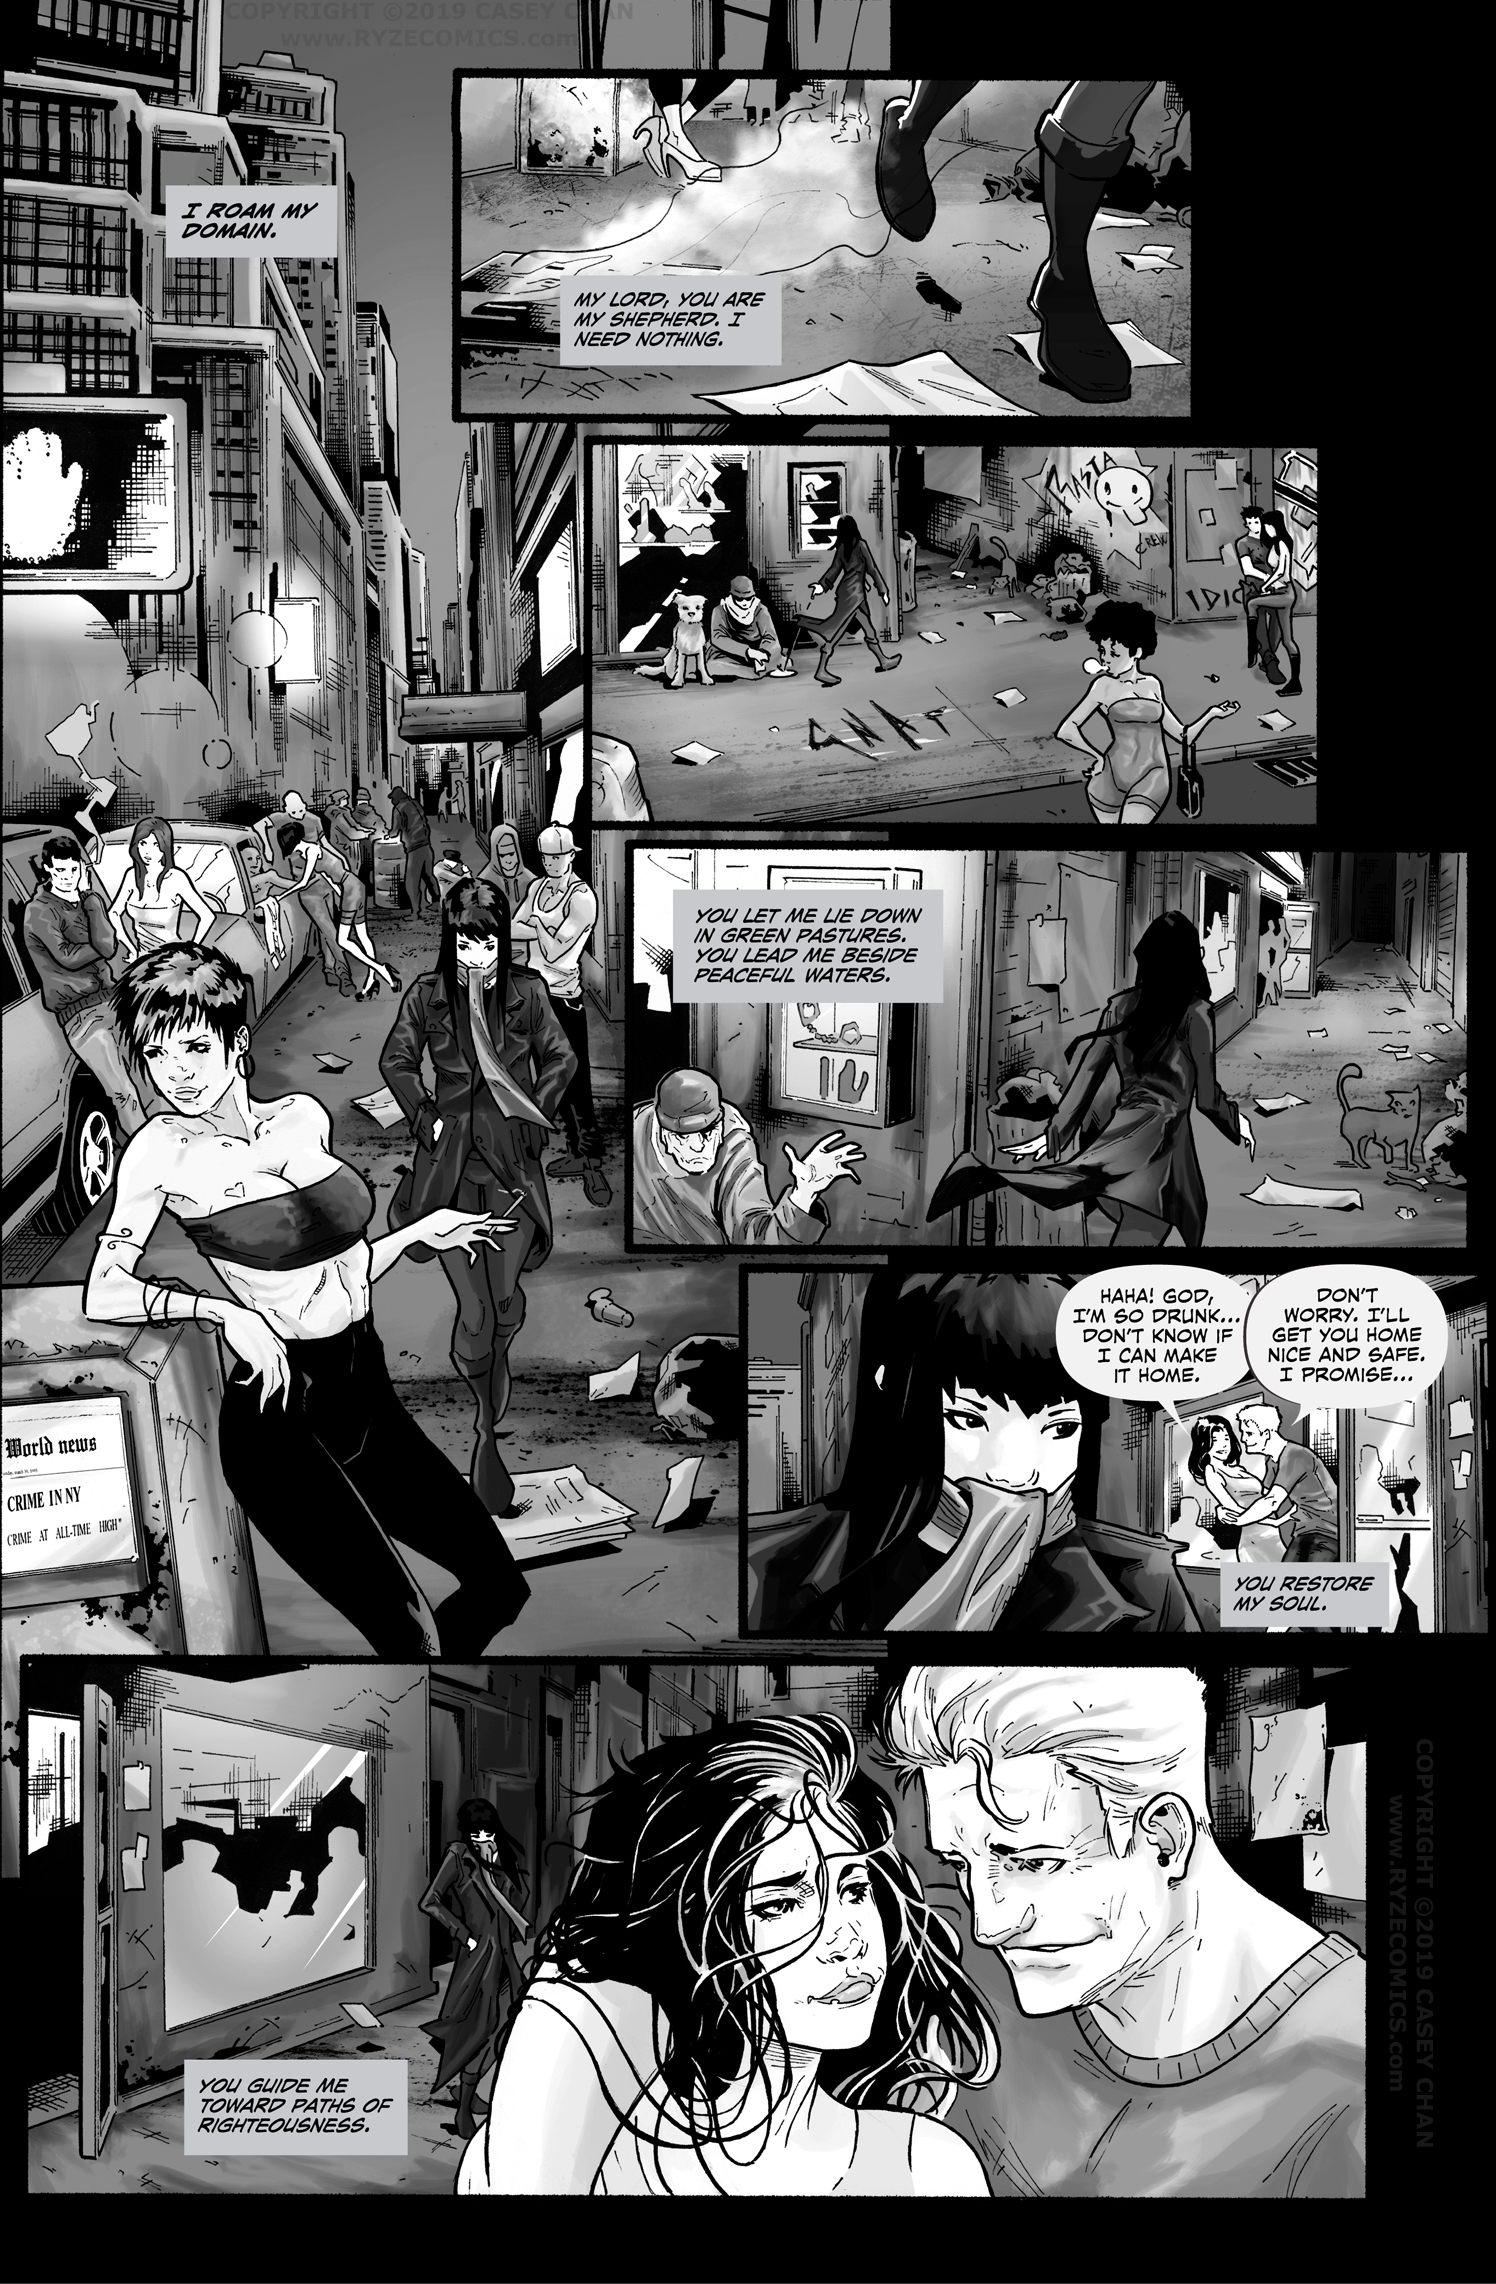 SISTER - Ryze Comics - Feb2019200 - pg2 BW.jpg